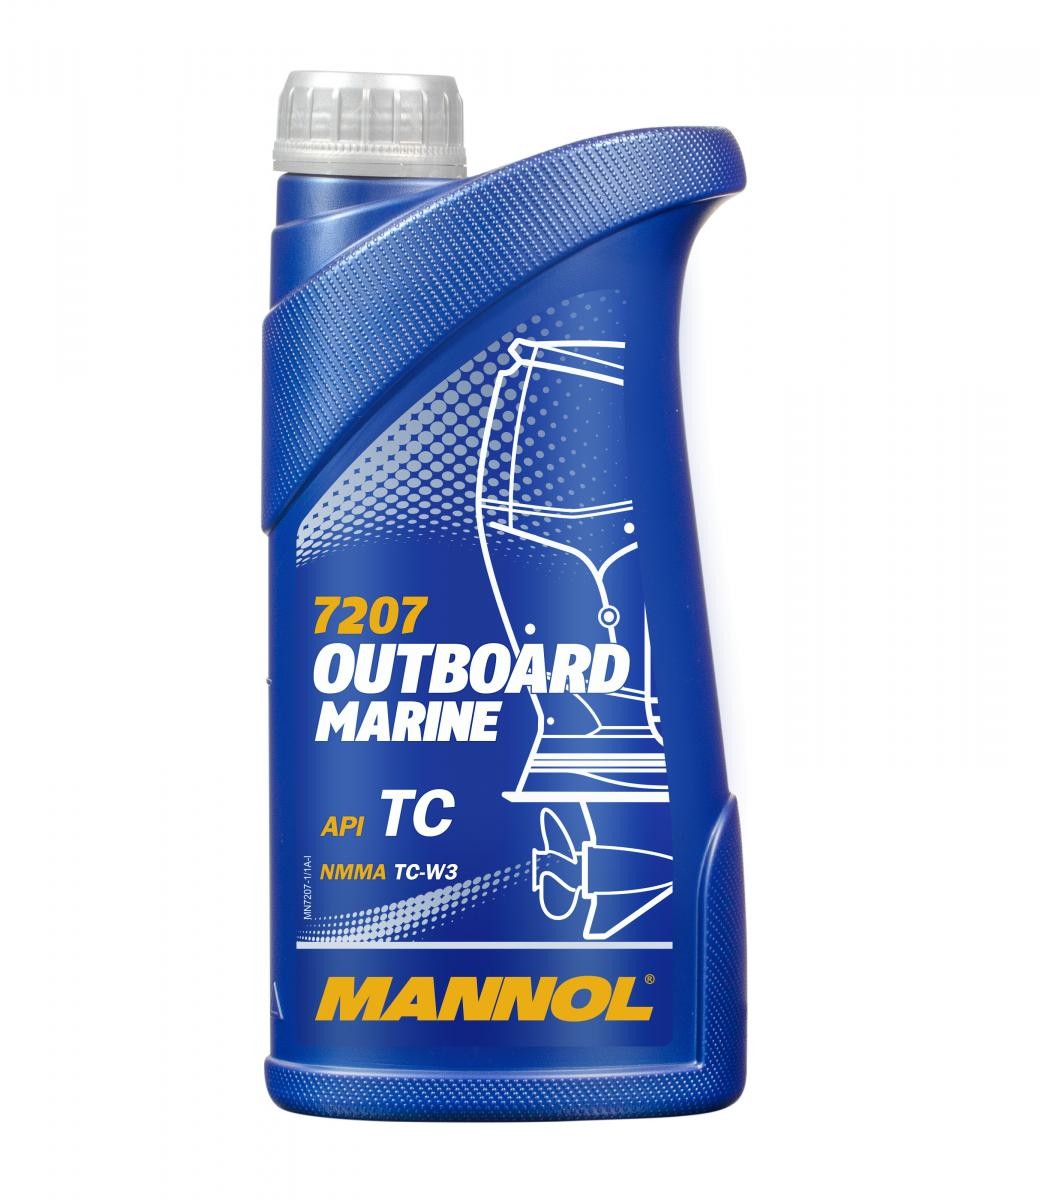 MANNOL Outboard, Marine 1l Motor oil MN7207-1 buy